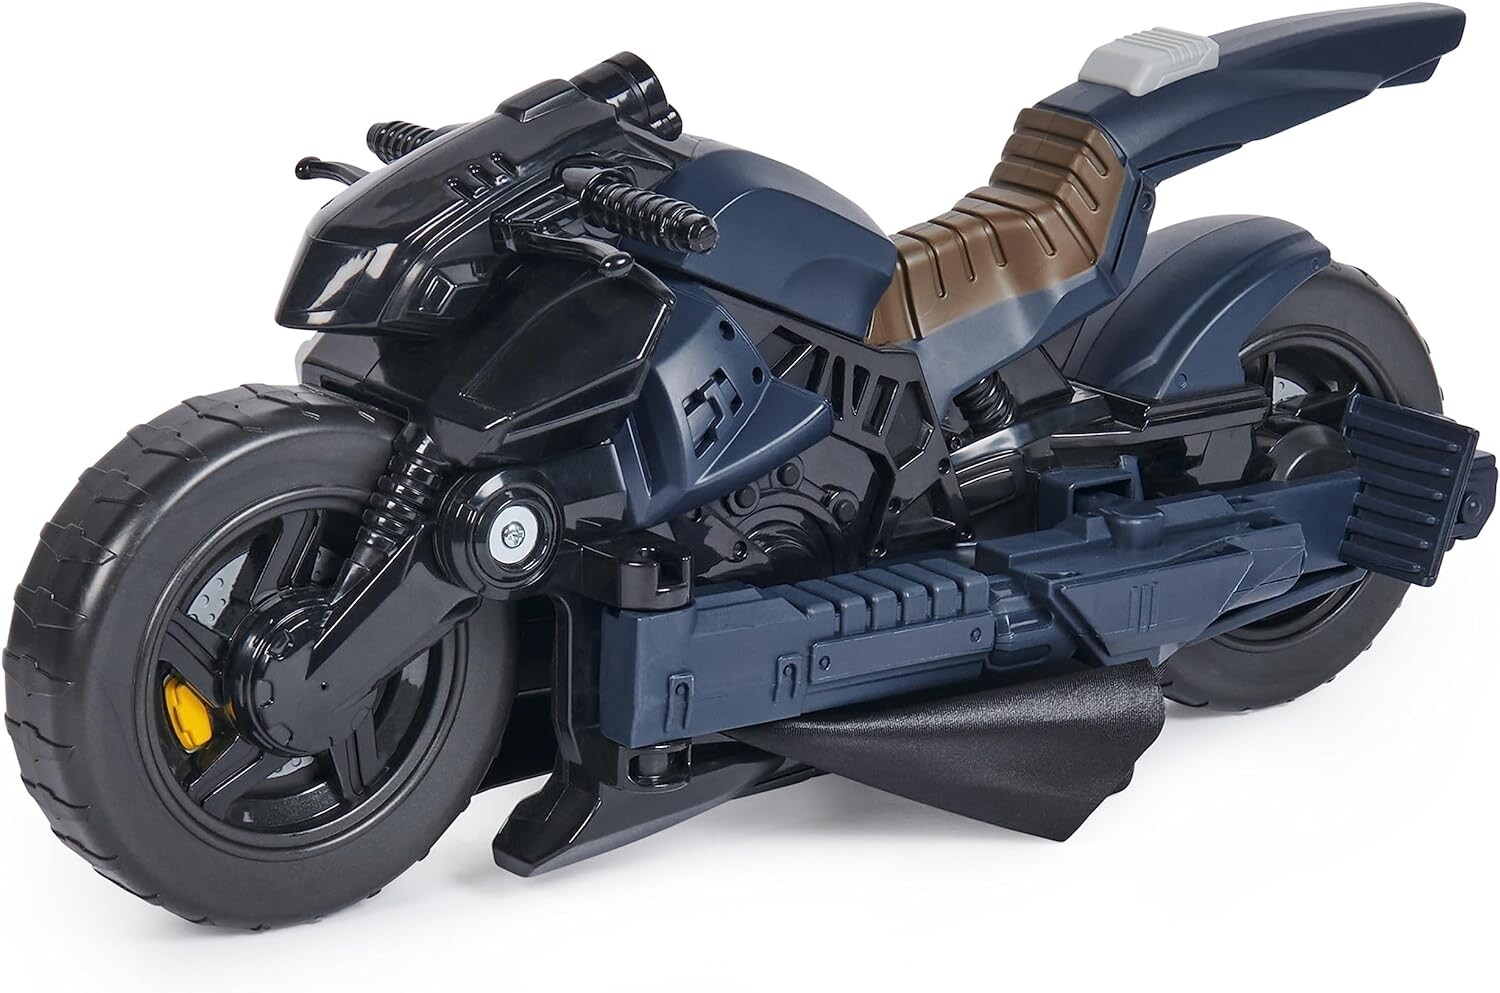 La moto de Batman est à vendre